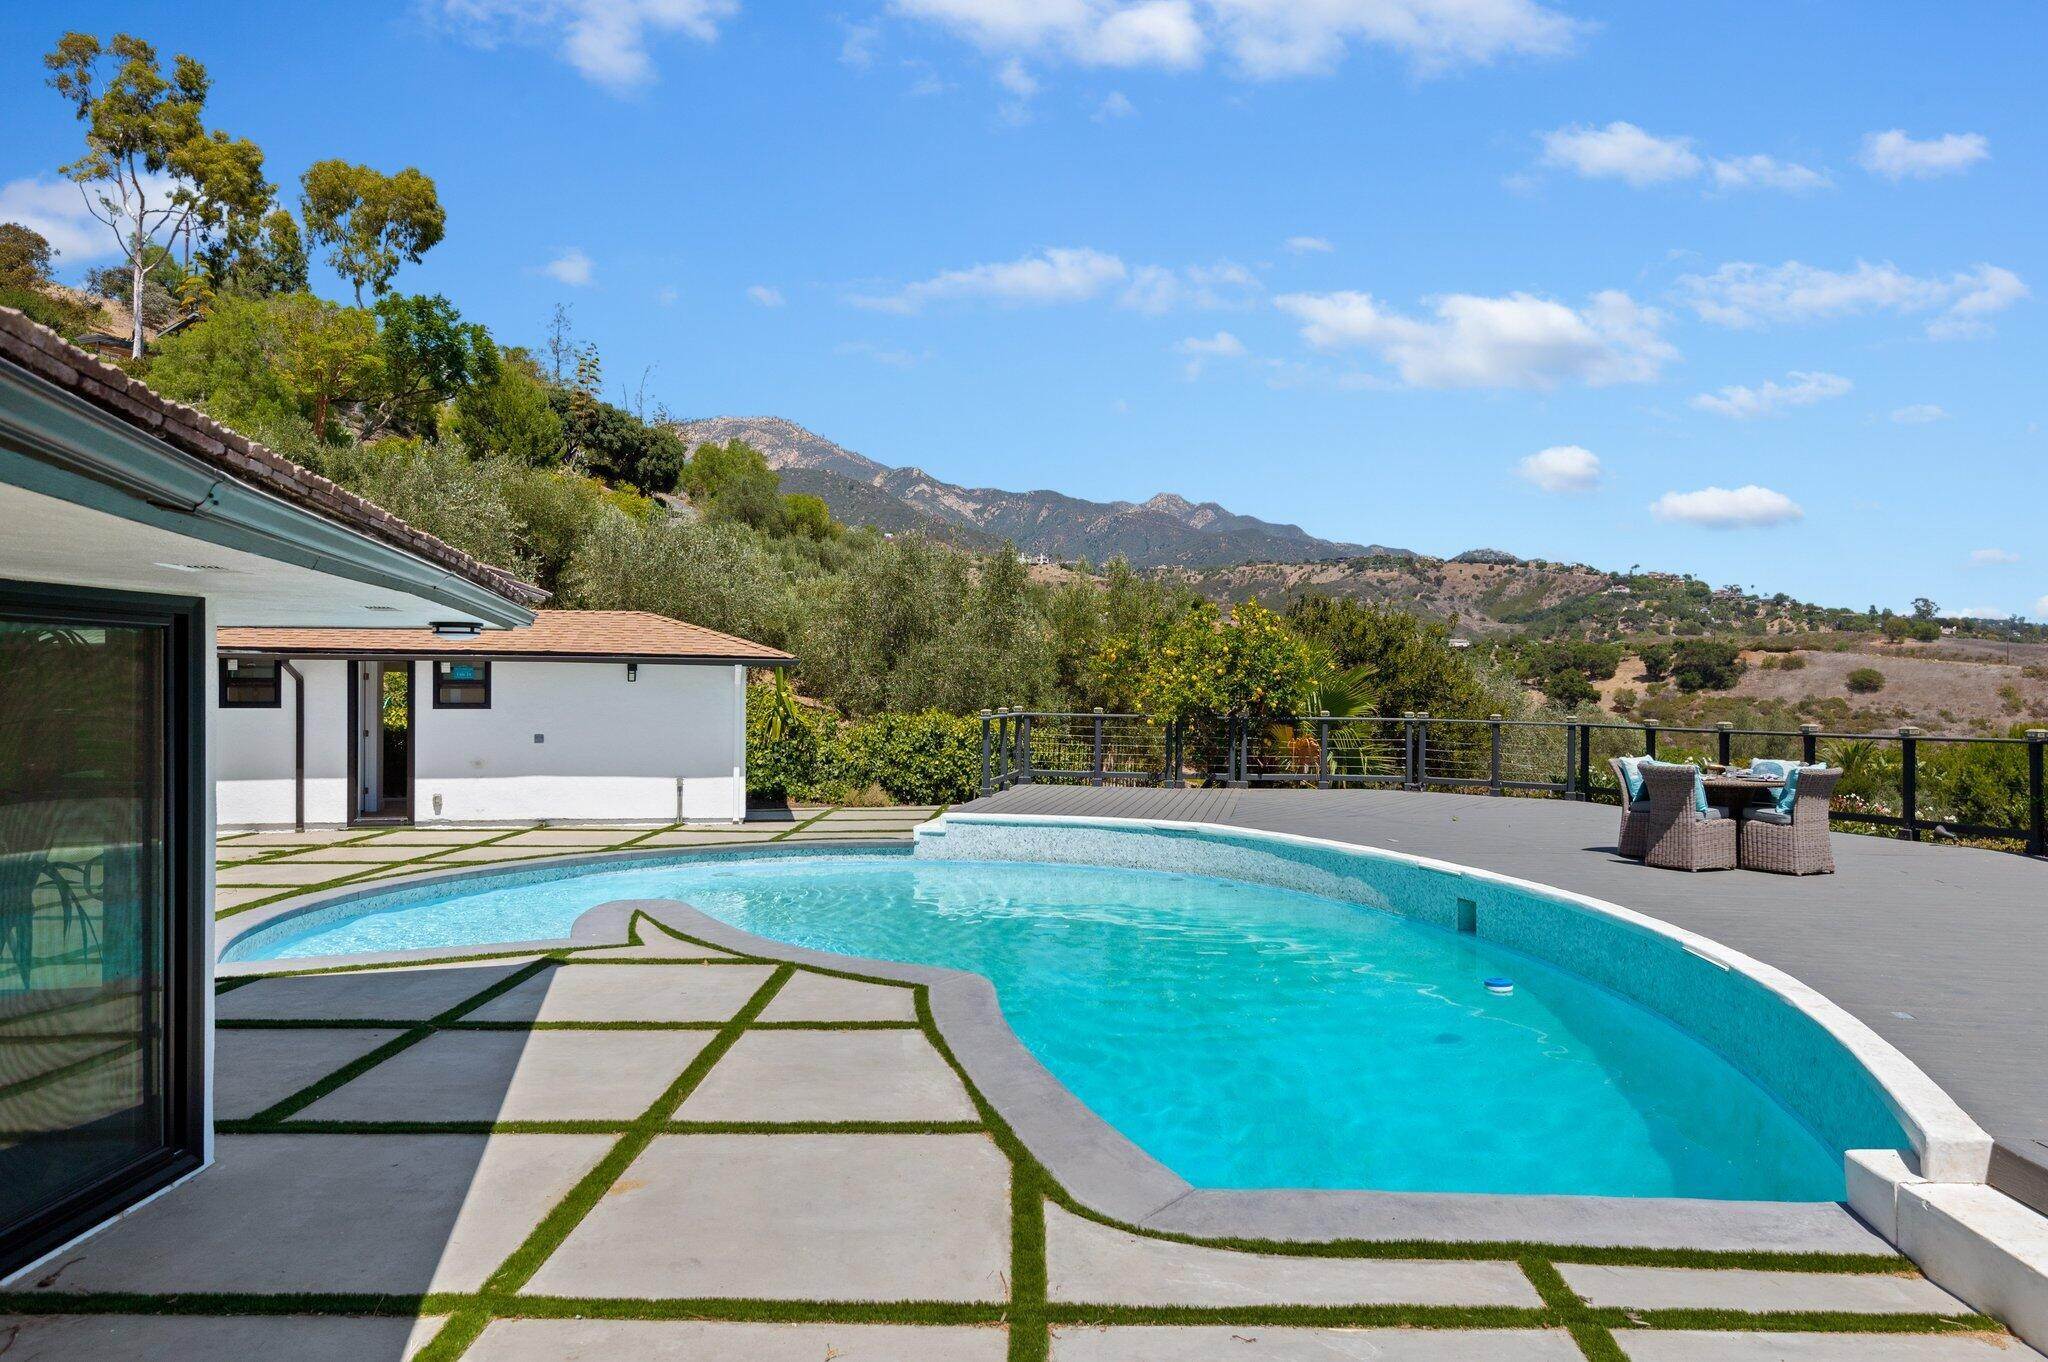 21. Estate for Sale at 8 Celine Drive Santa Barbara, California 93105 United States